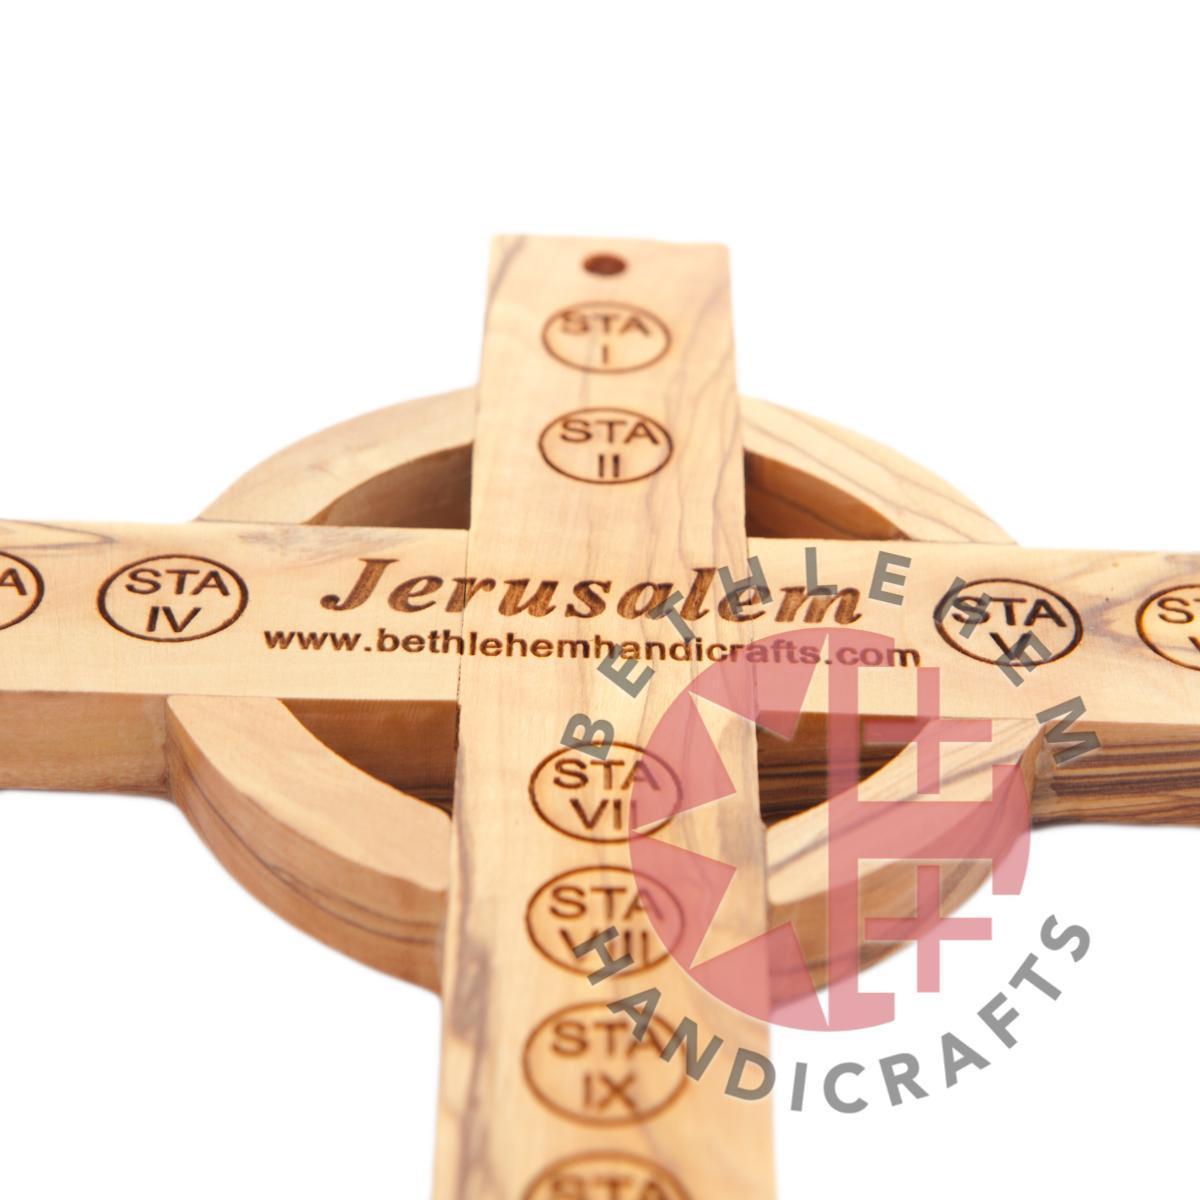 Holy Land Cross - Olive Wood Gift from Jerusalem